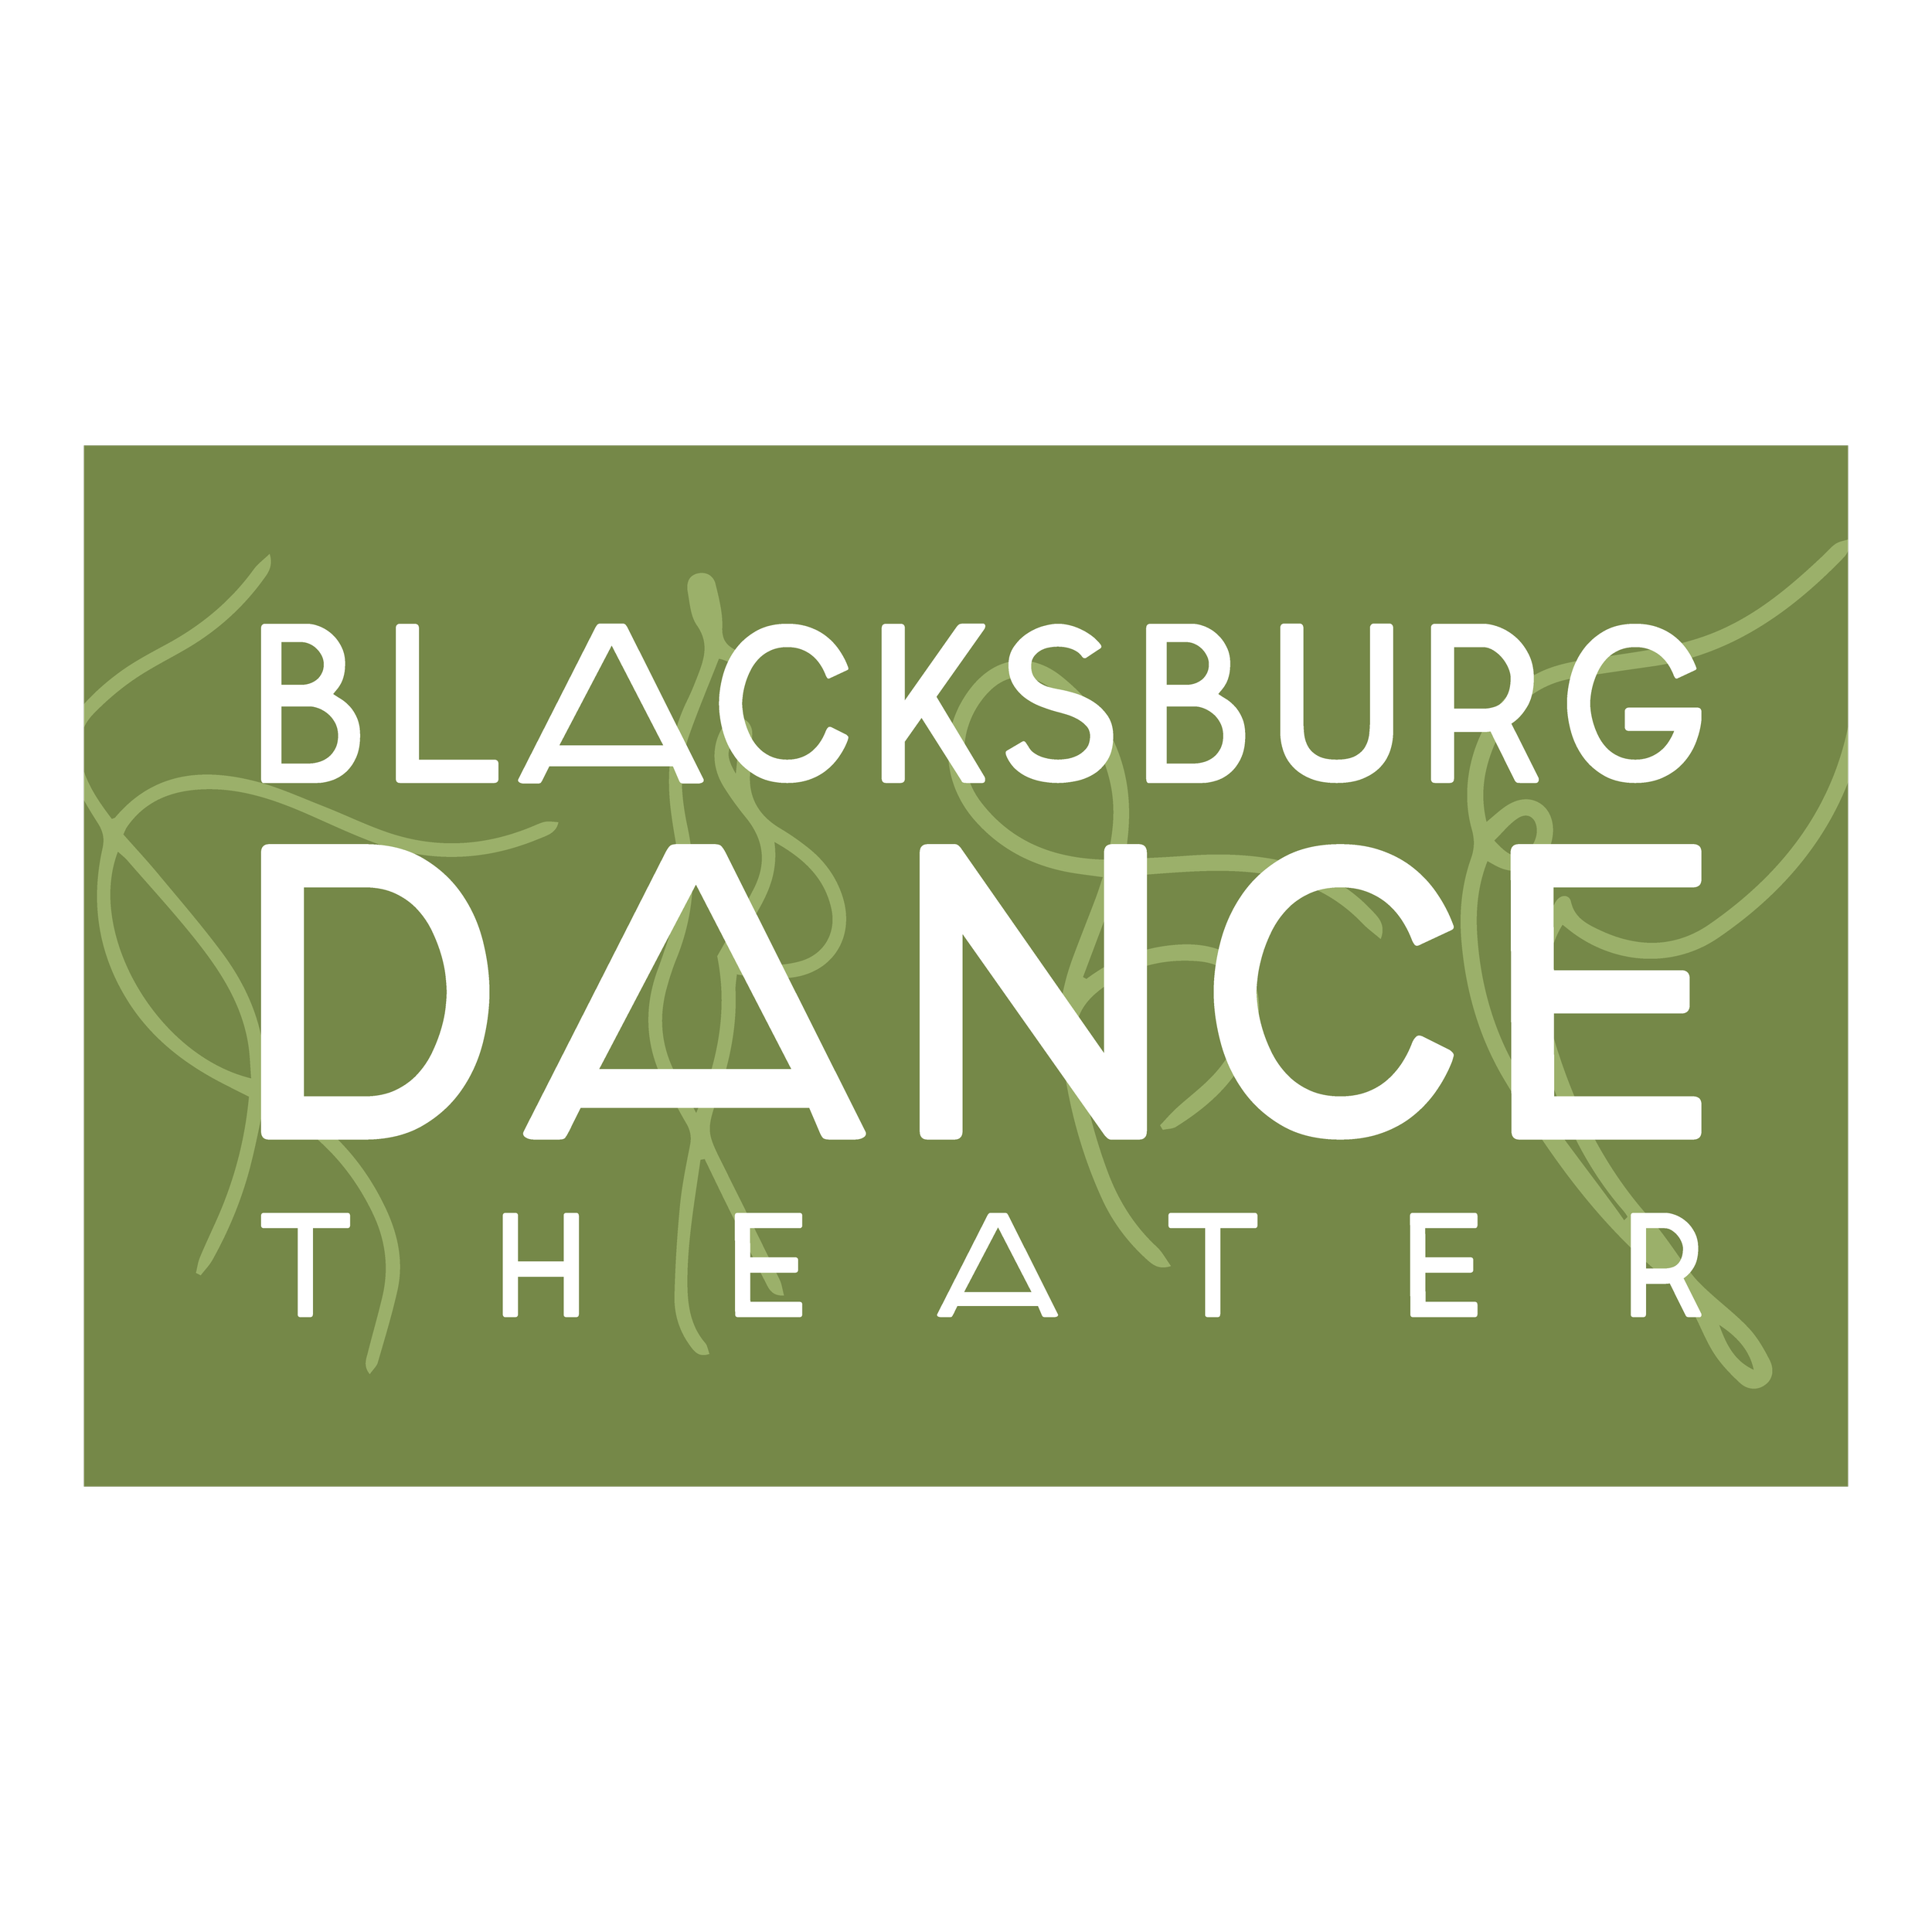 Finals_Blacksburg Dance Theater - filled rectangle green.png